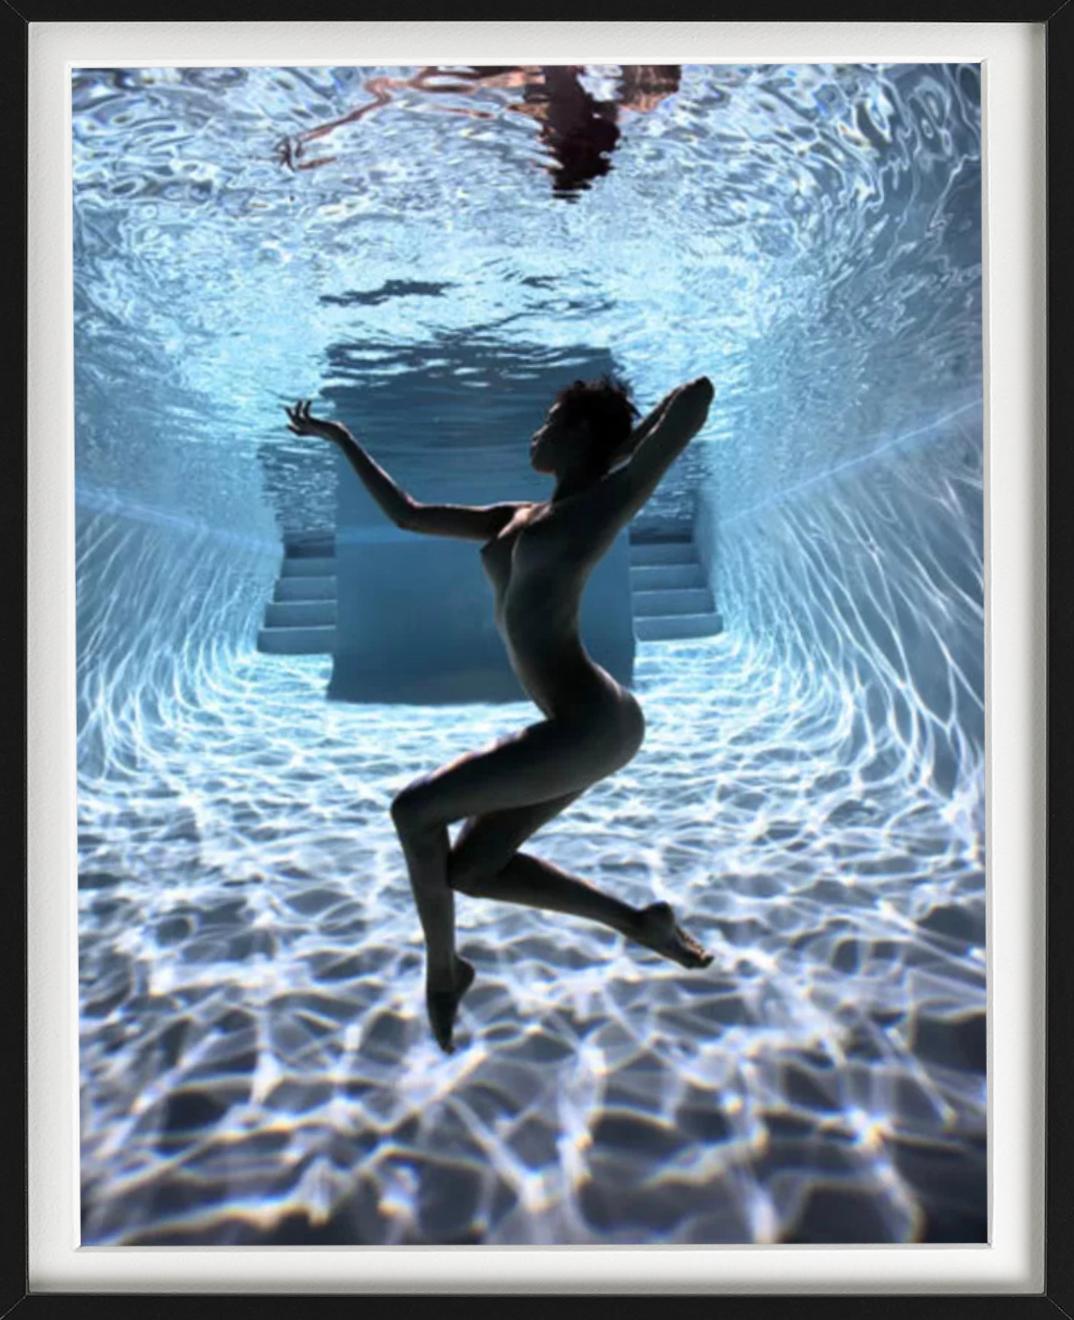 Underwater Study #2826 - Nude Model Posing Underwater in a Pool  - Blue Nude Photograph by Howard Schatz